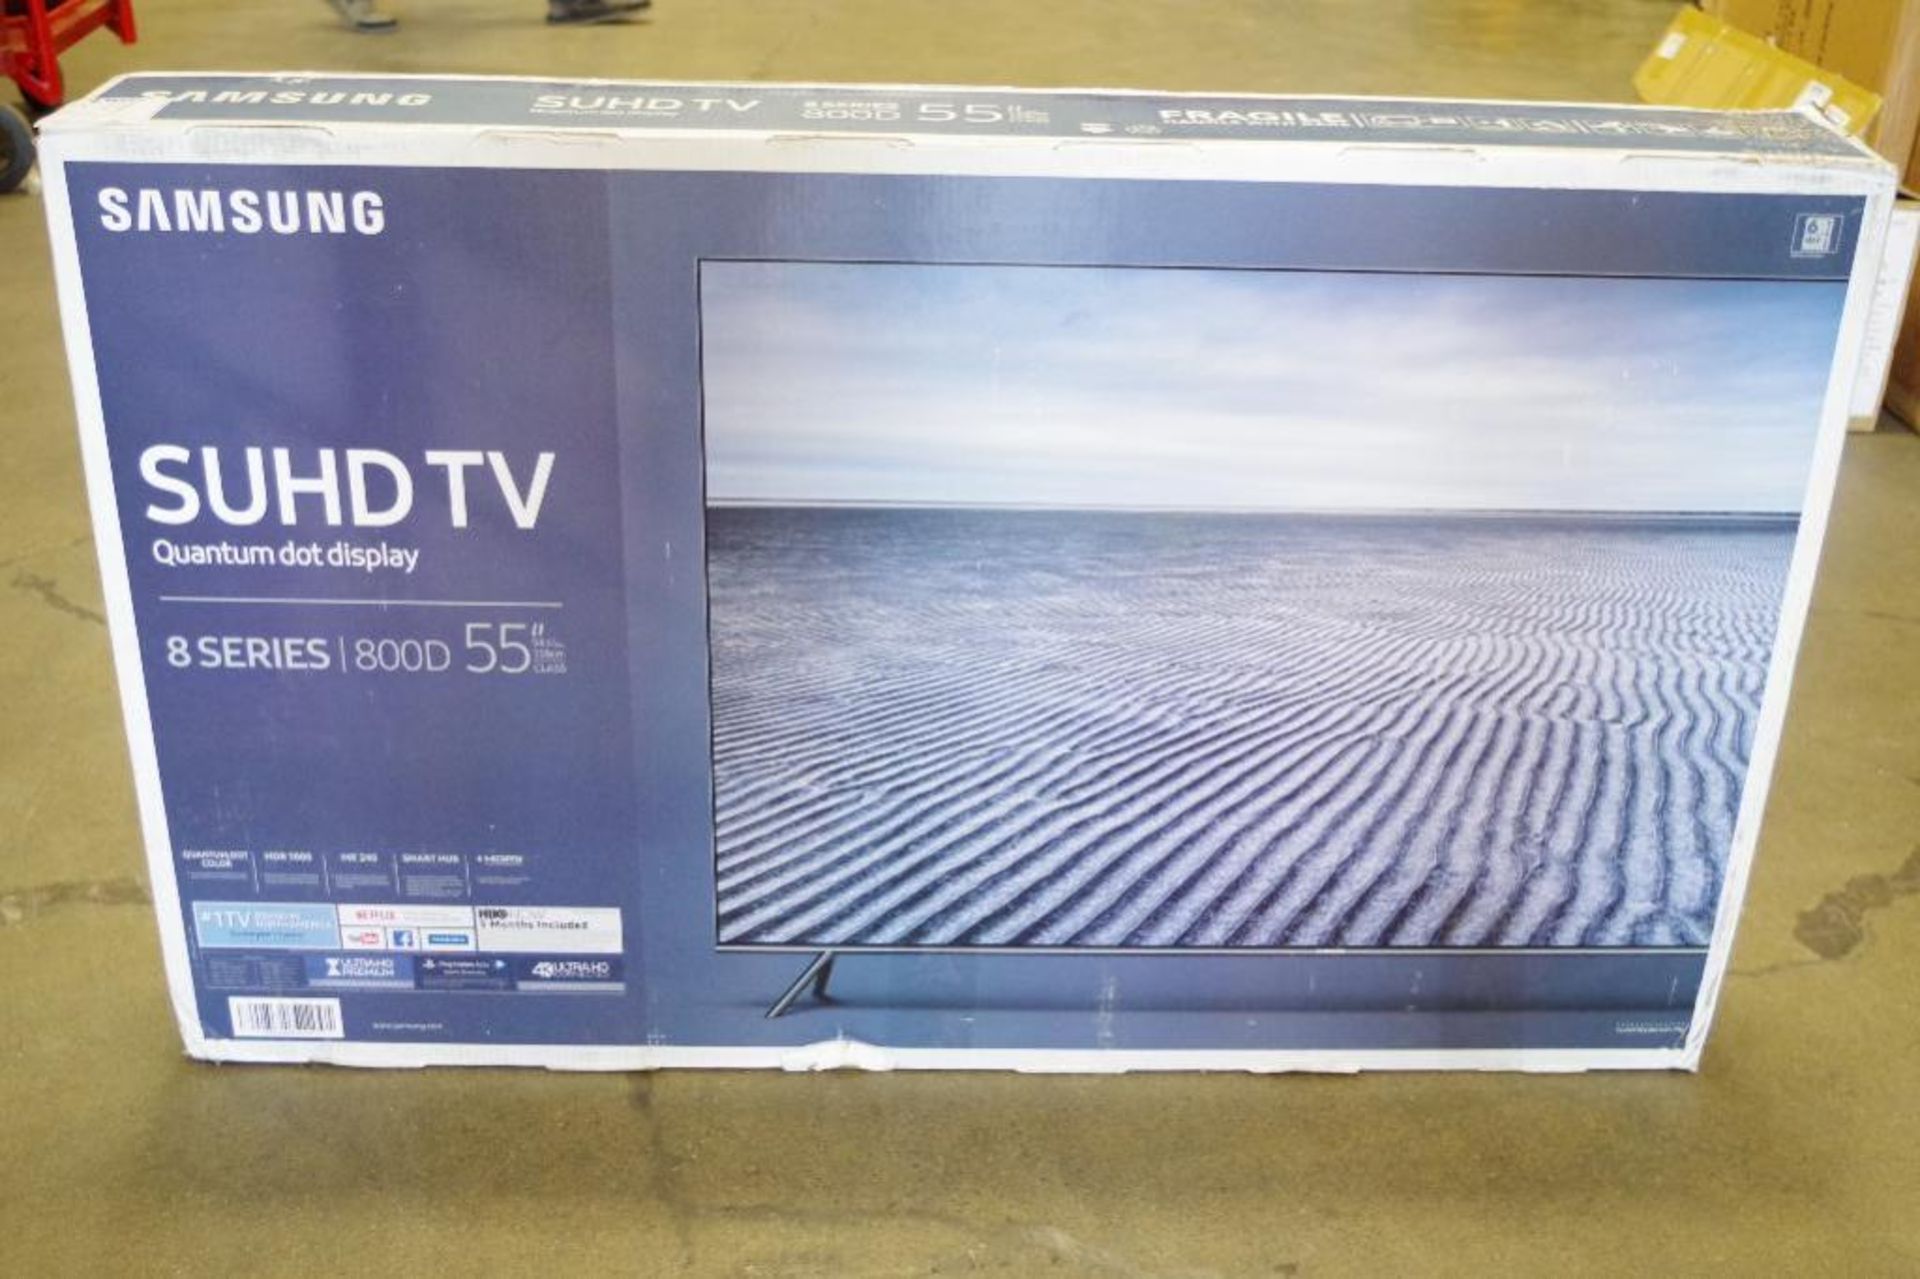 NEW 55" SAMSUNG 4K UHD LED SMART TV 8 Series M/N UN55KS800D ( NEW in sealed box) - Image 2 of 7